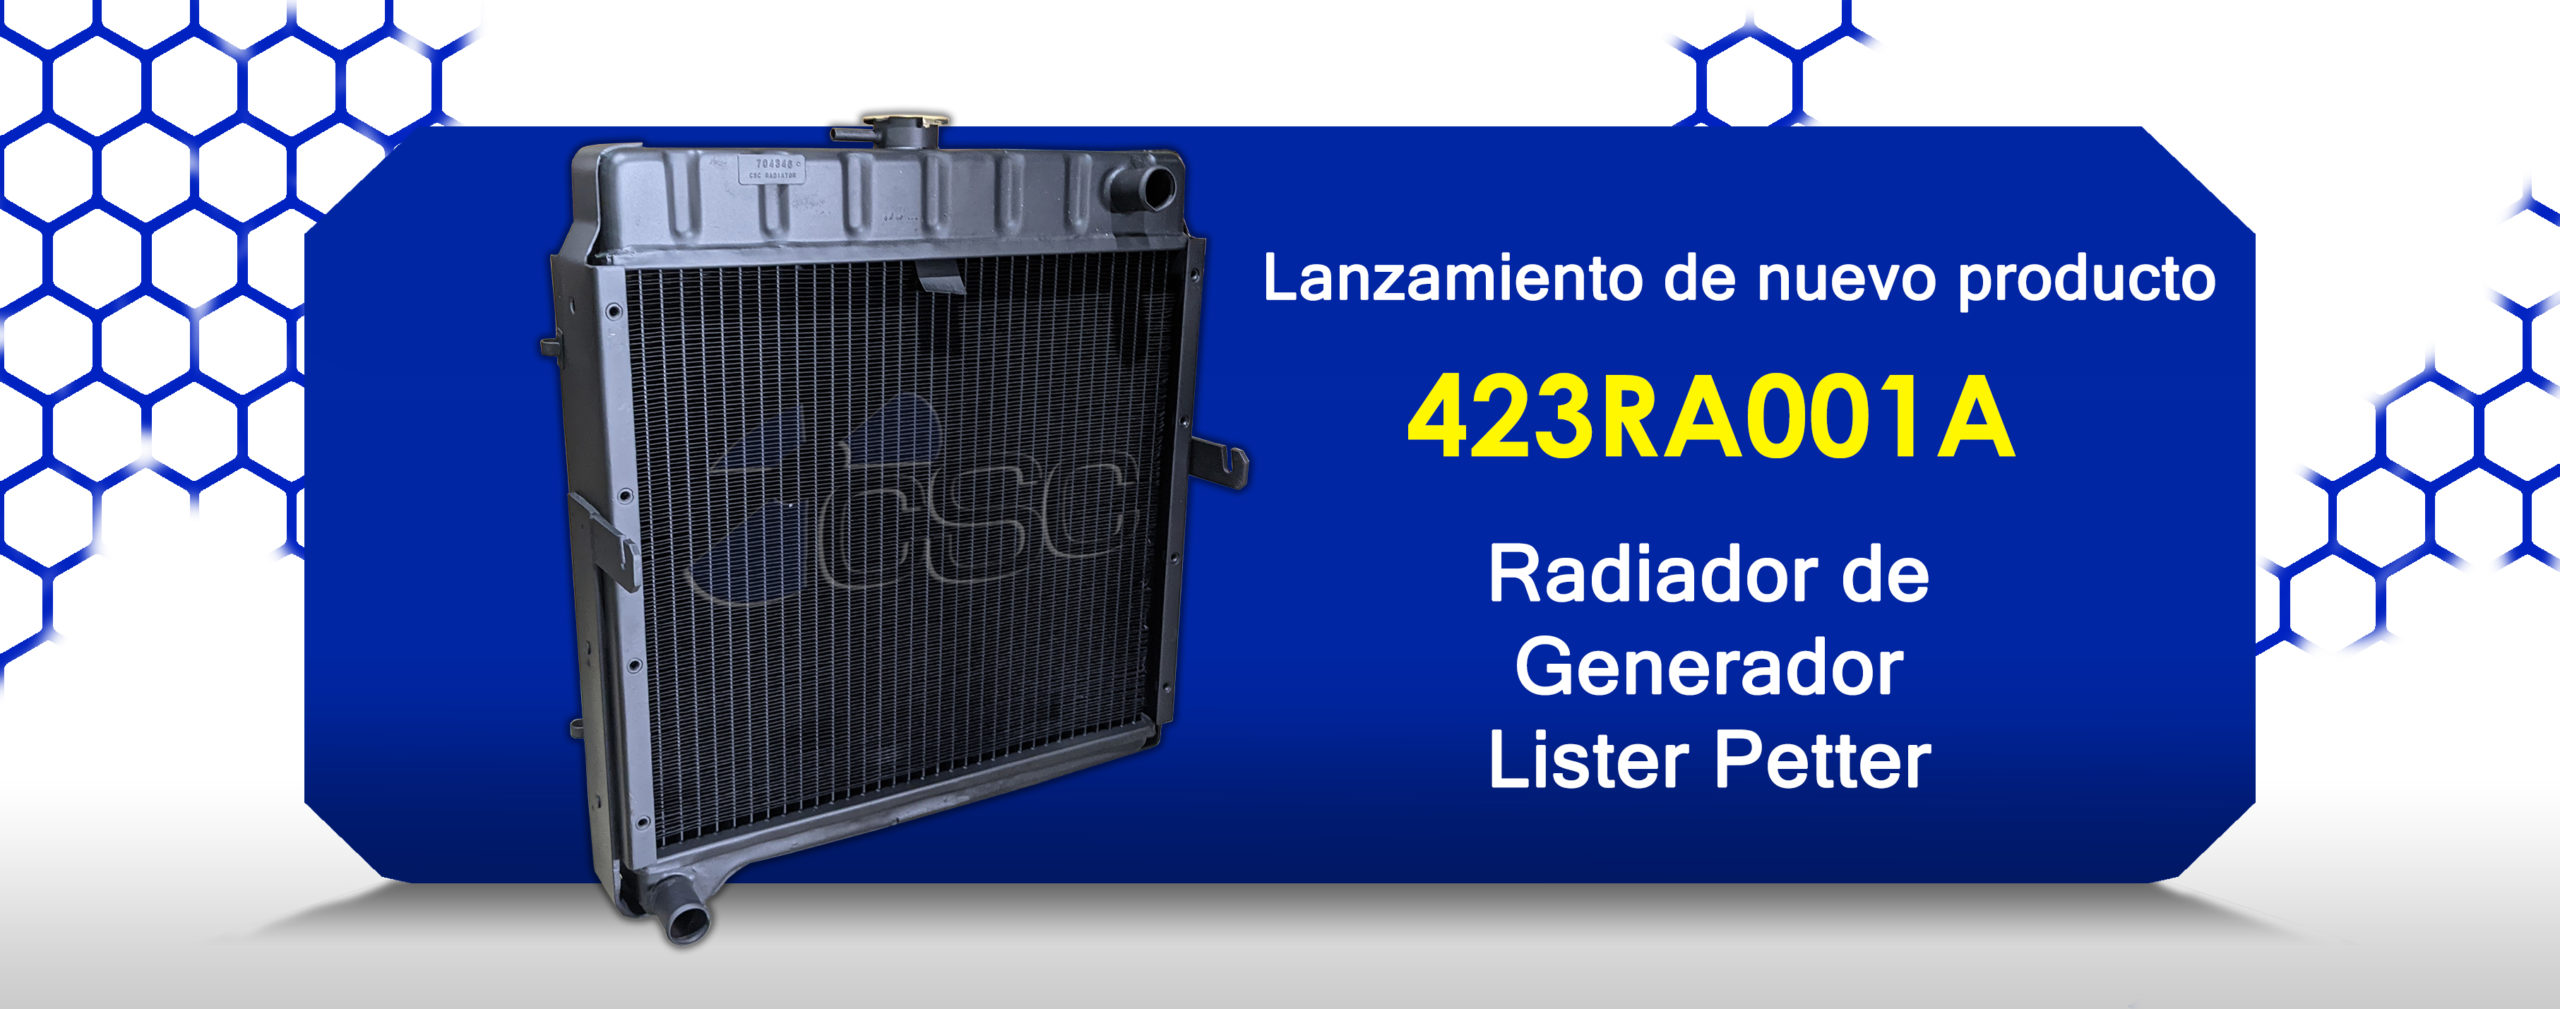 423RA001A para radiador de generador Lister Petter de 16kw